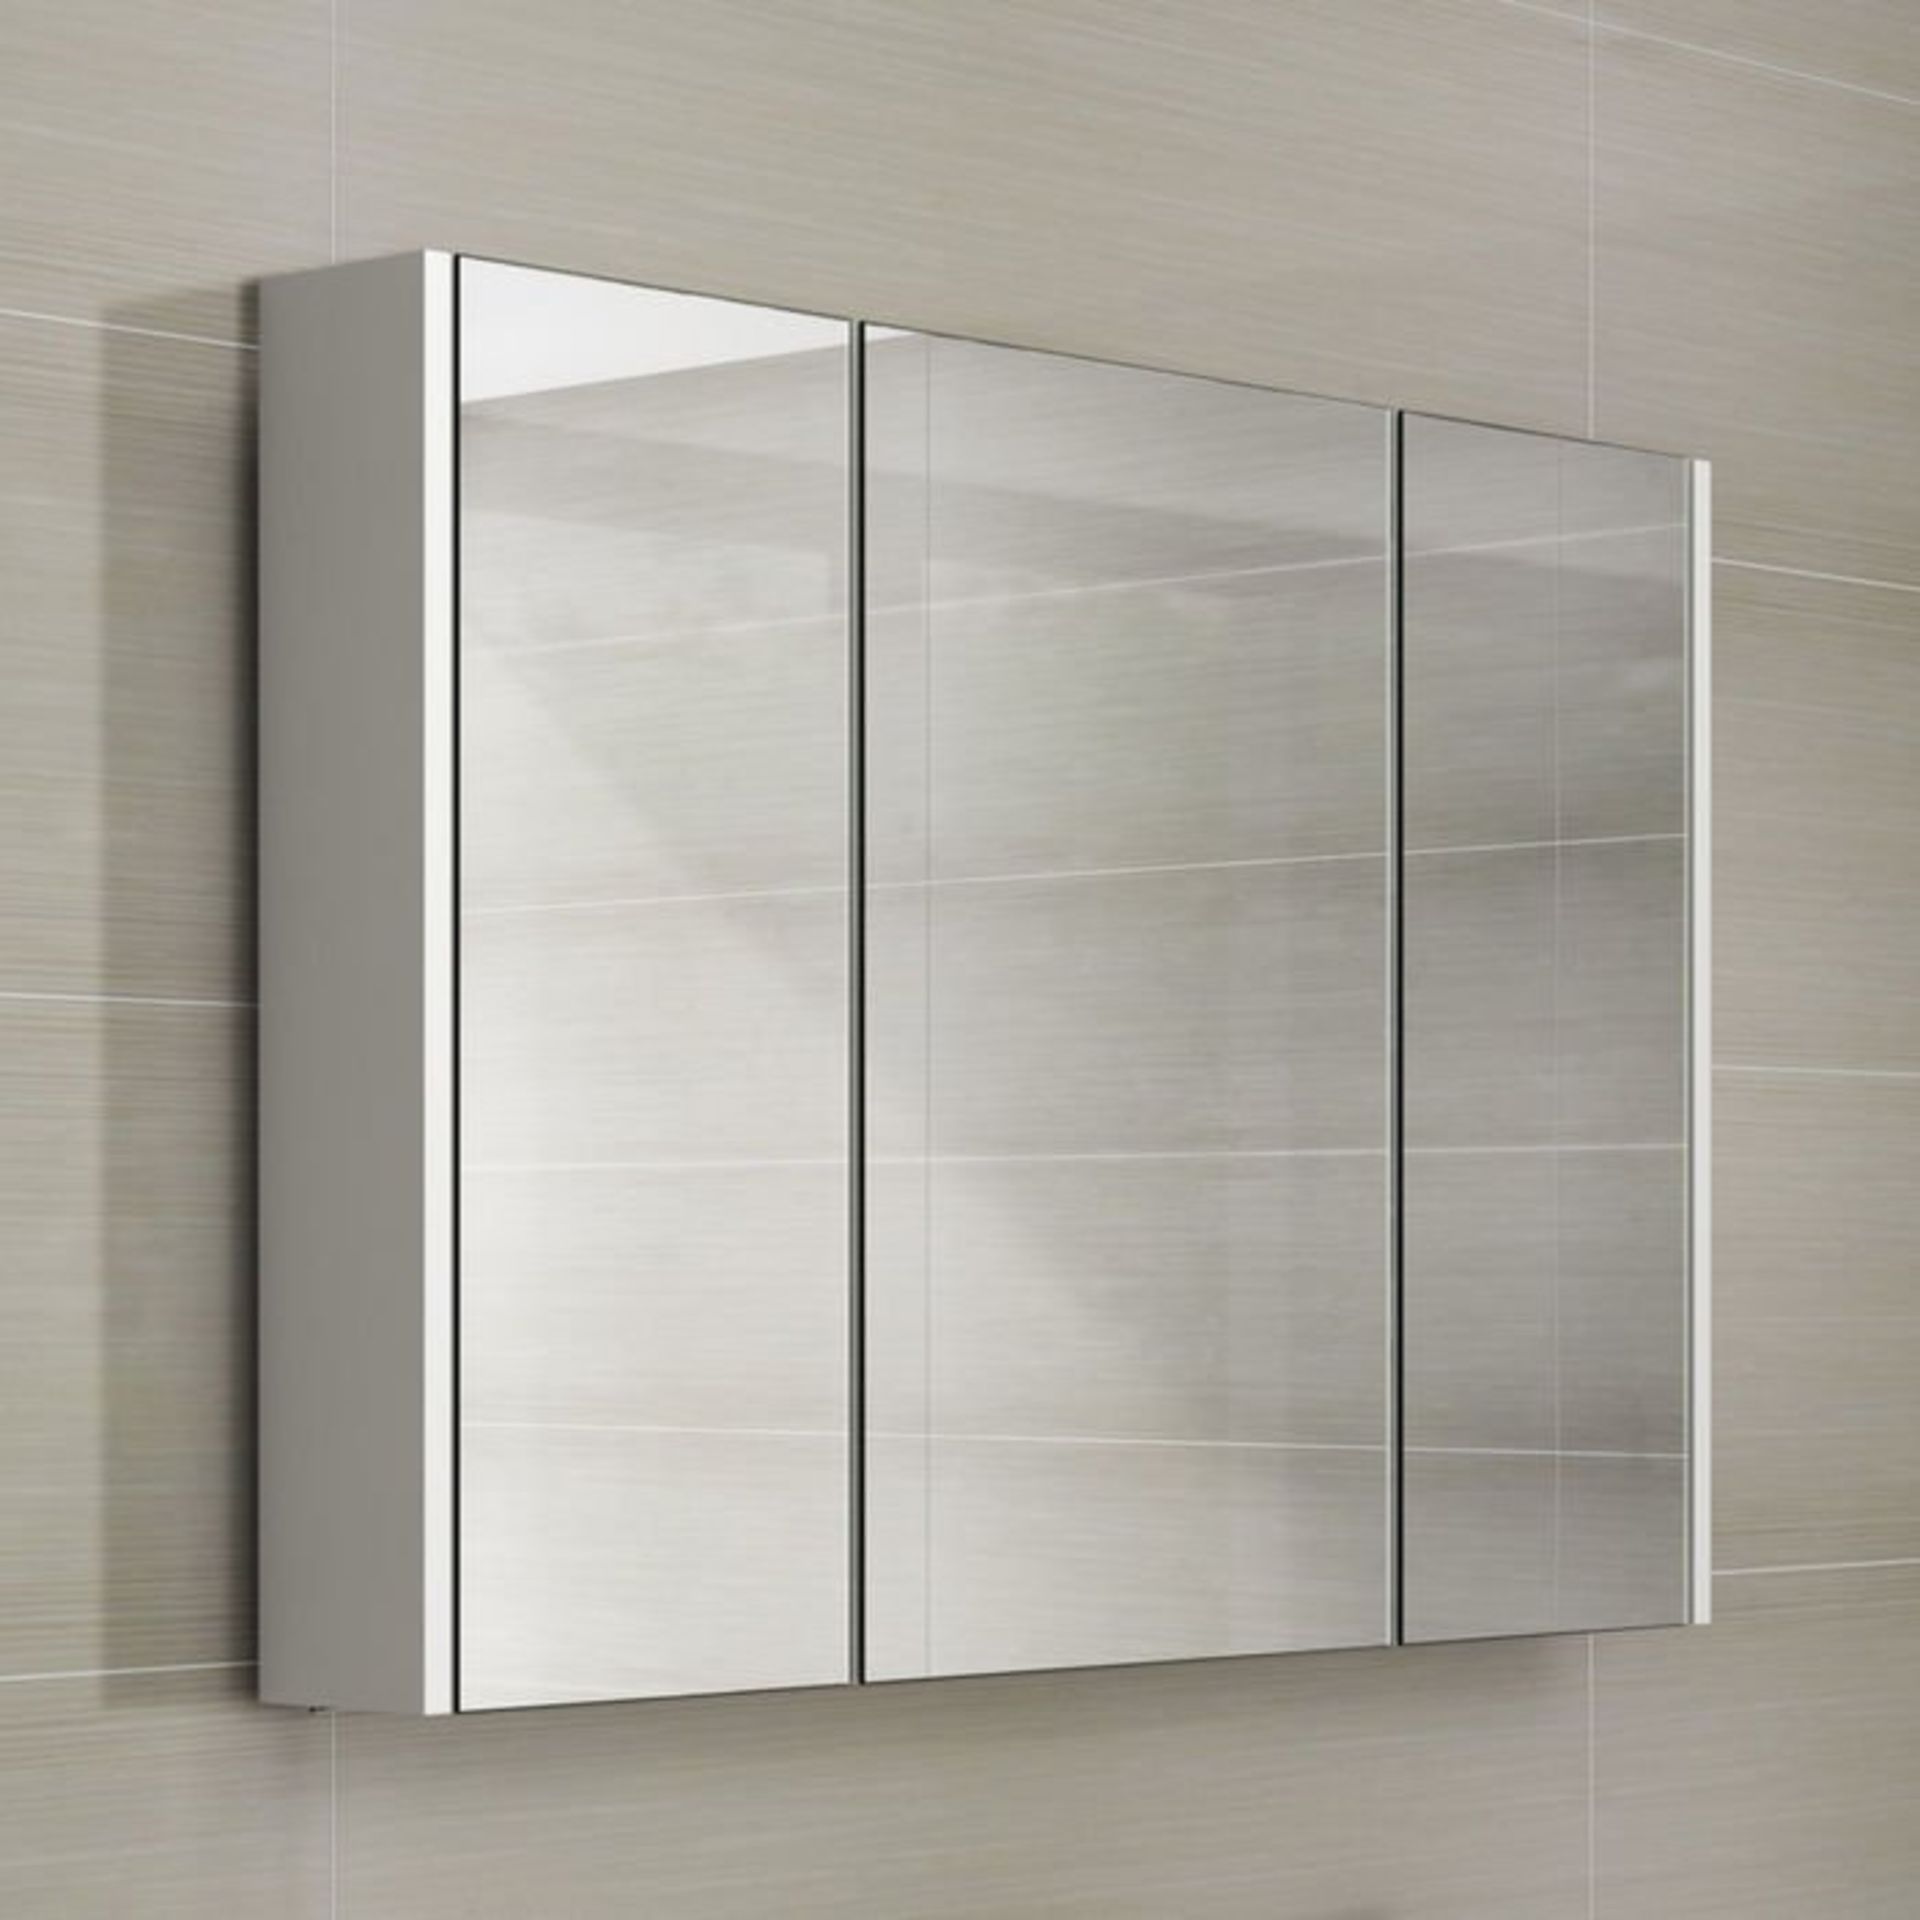 (G121) 900mm Gloss White Triple Door Mirror Cabinet RRP £299.99 Sleek contemporary design Triple